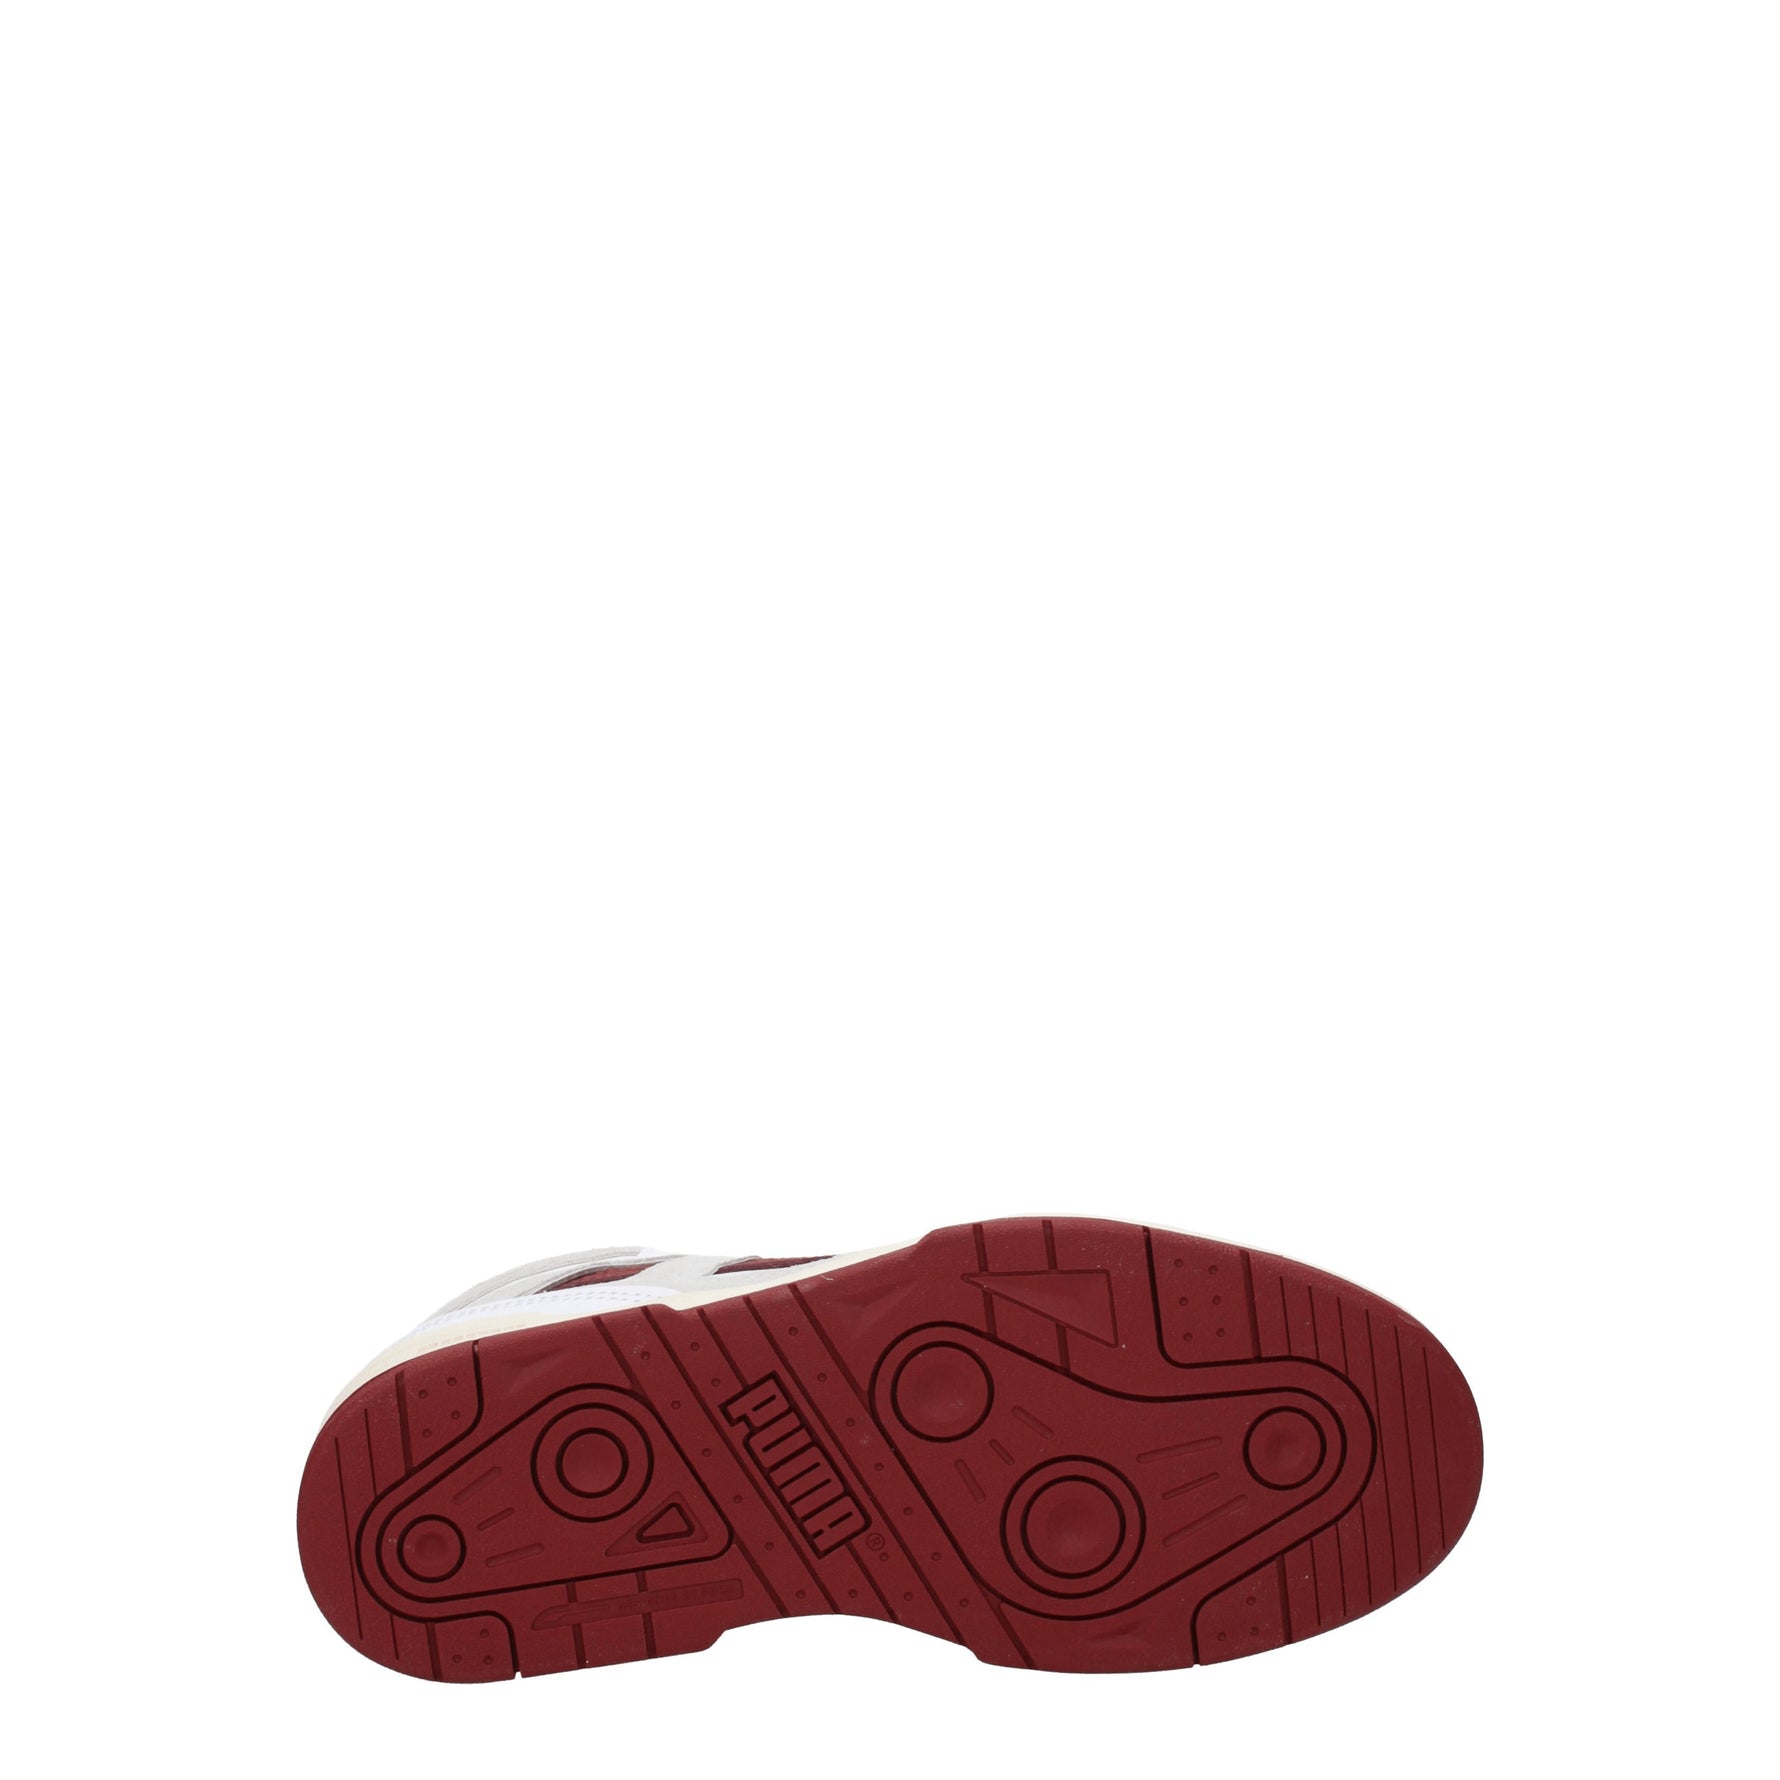 Puma Sneakers Uomo Pelle Bianco Rosso